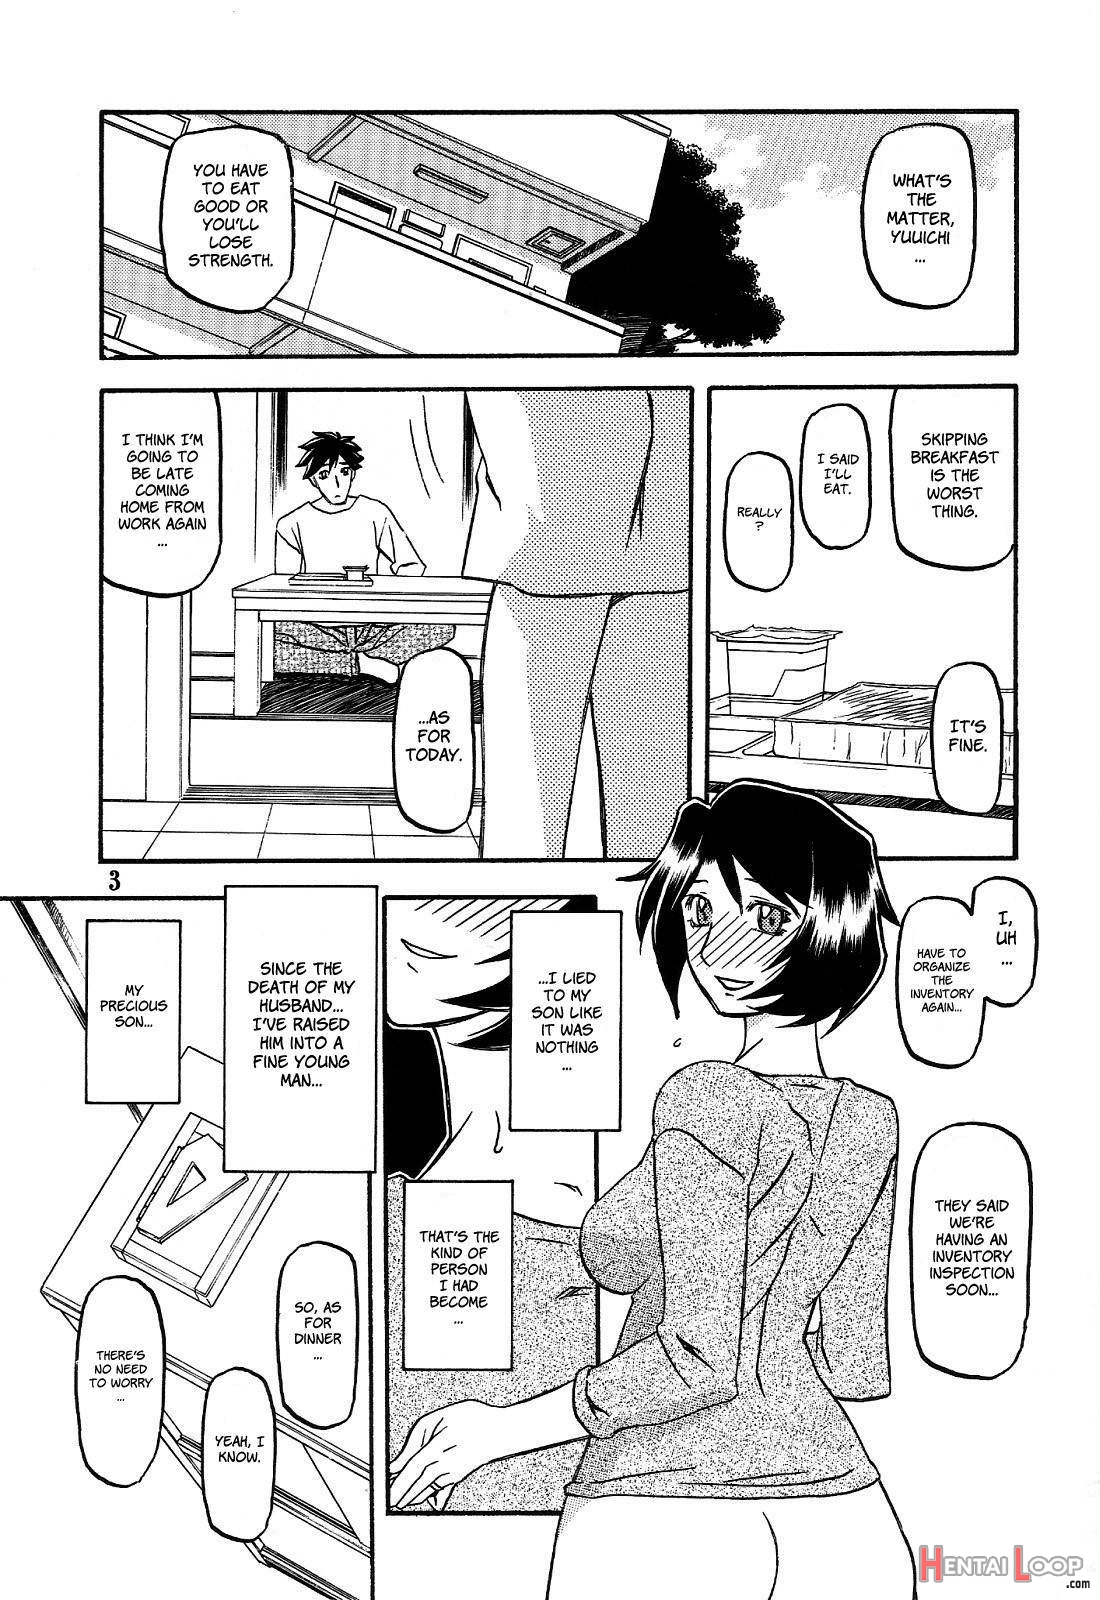 Yamahime no Mi -Satomi AFTER- page 2